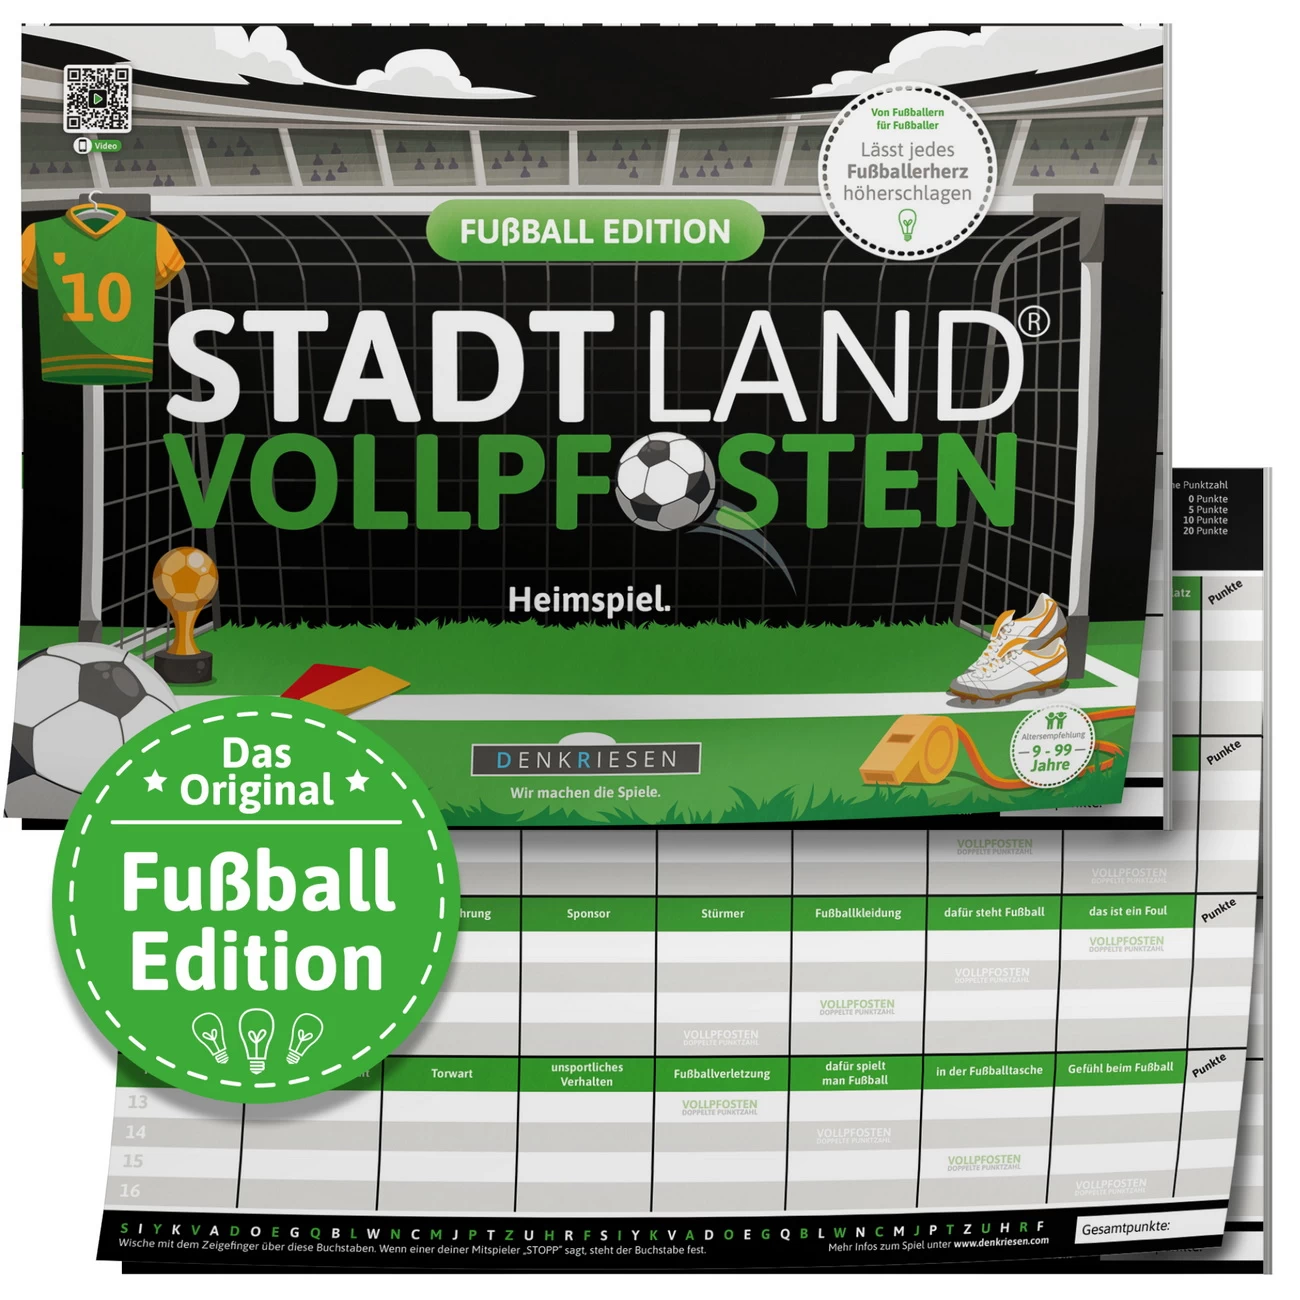 Fussball Edition - STADT LAND VOLLPFOSTEN  (DENKRIESEN